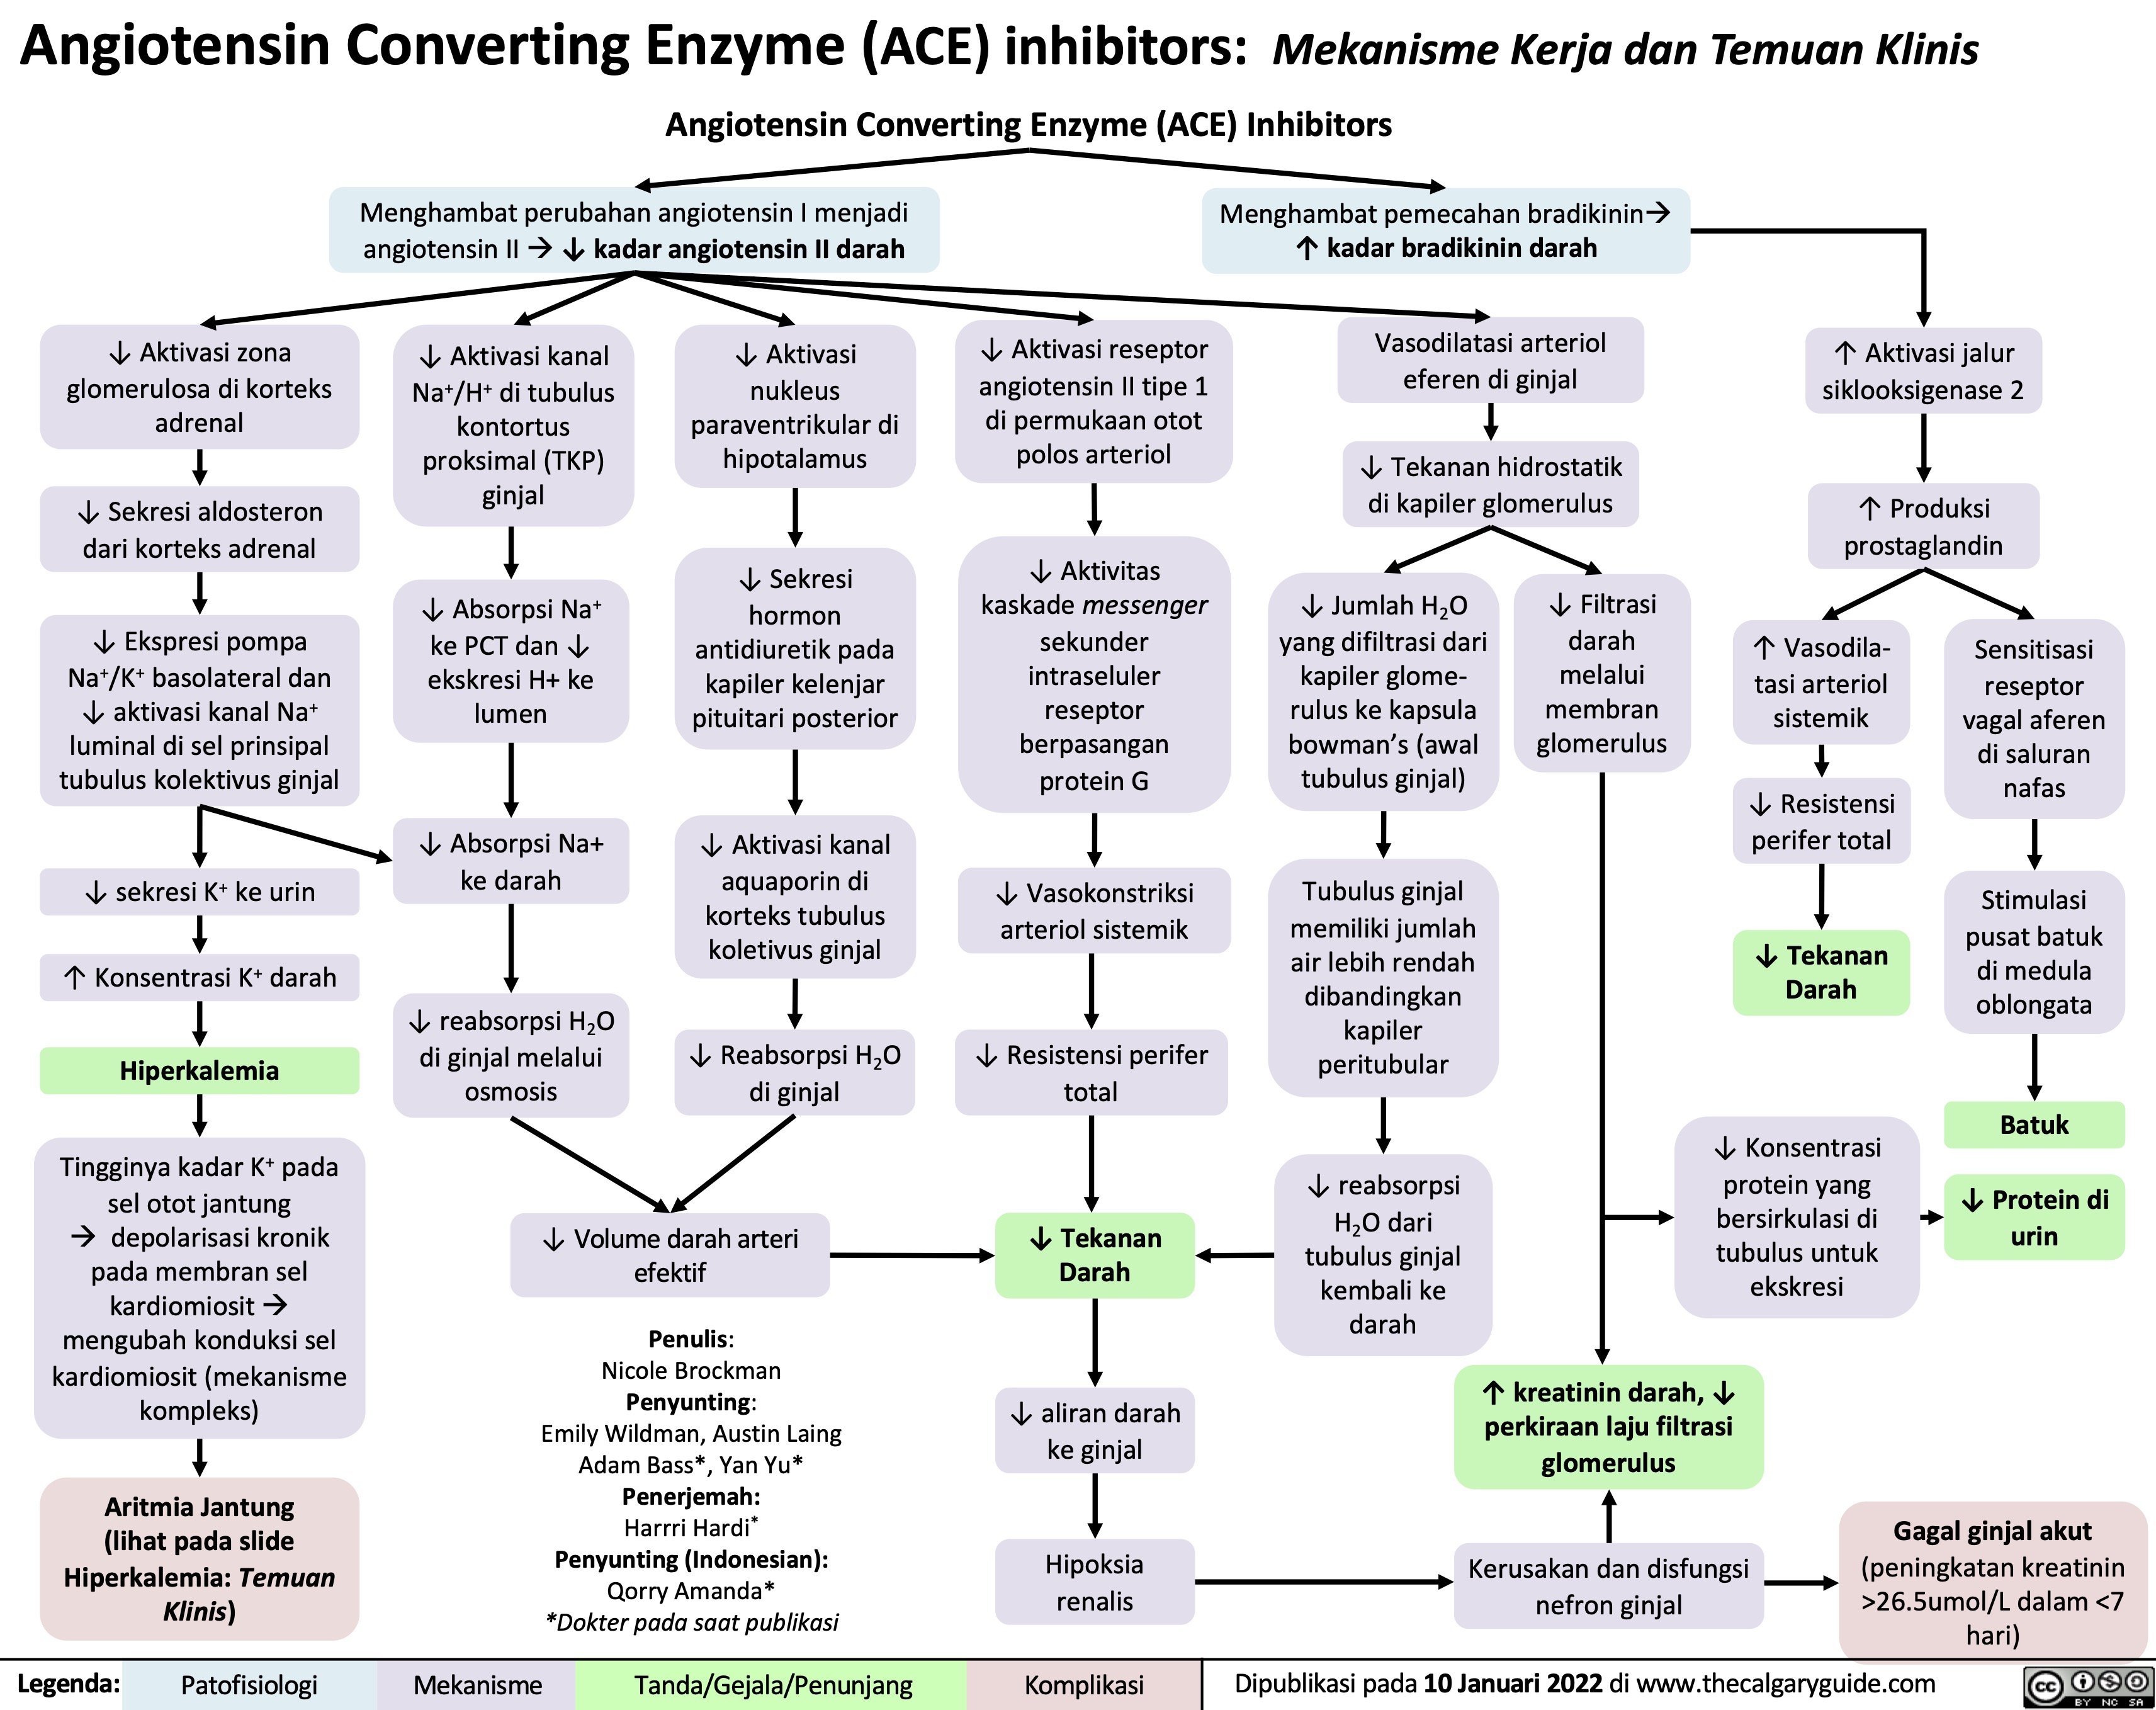 Angiotensin Converting Enzyme (ACE) inhibitors: Mekanisme Kerja dan Temuan Klinis